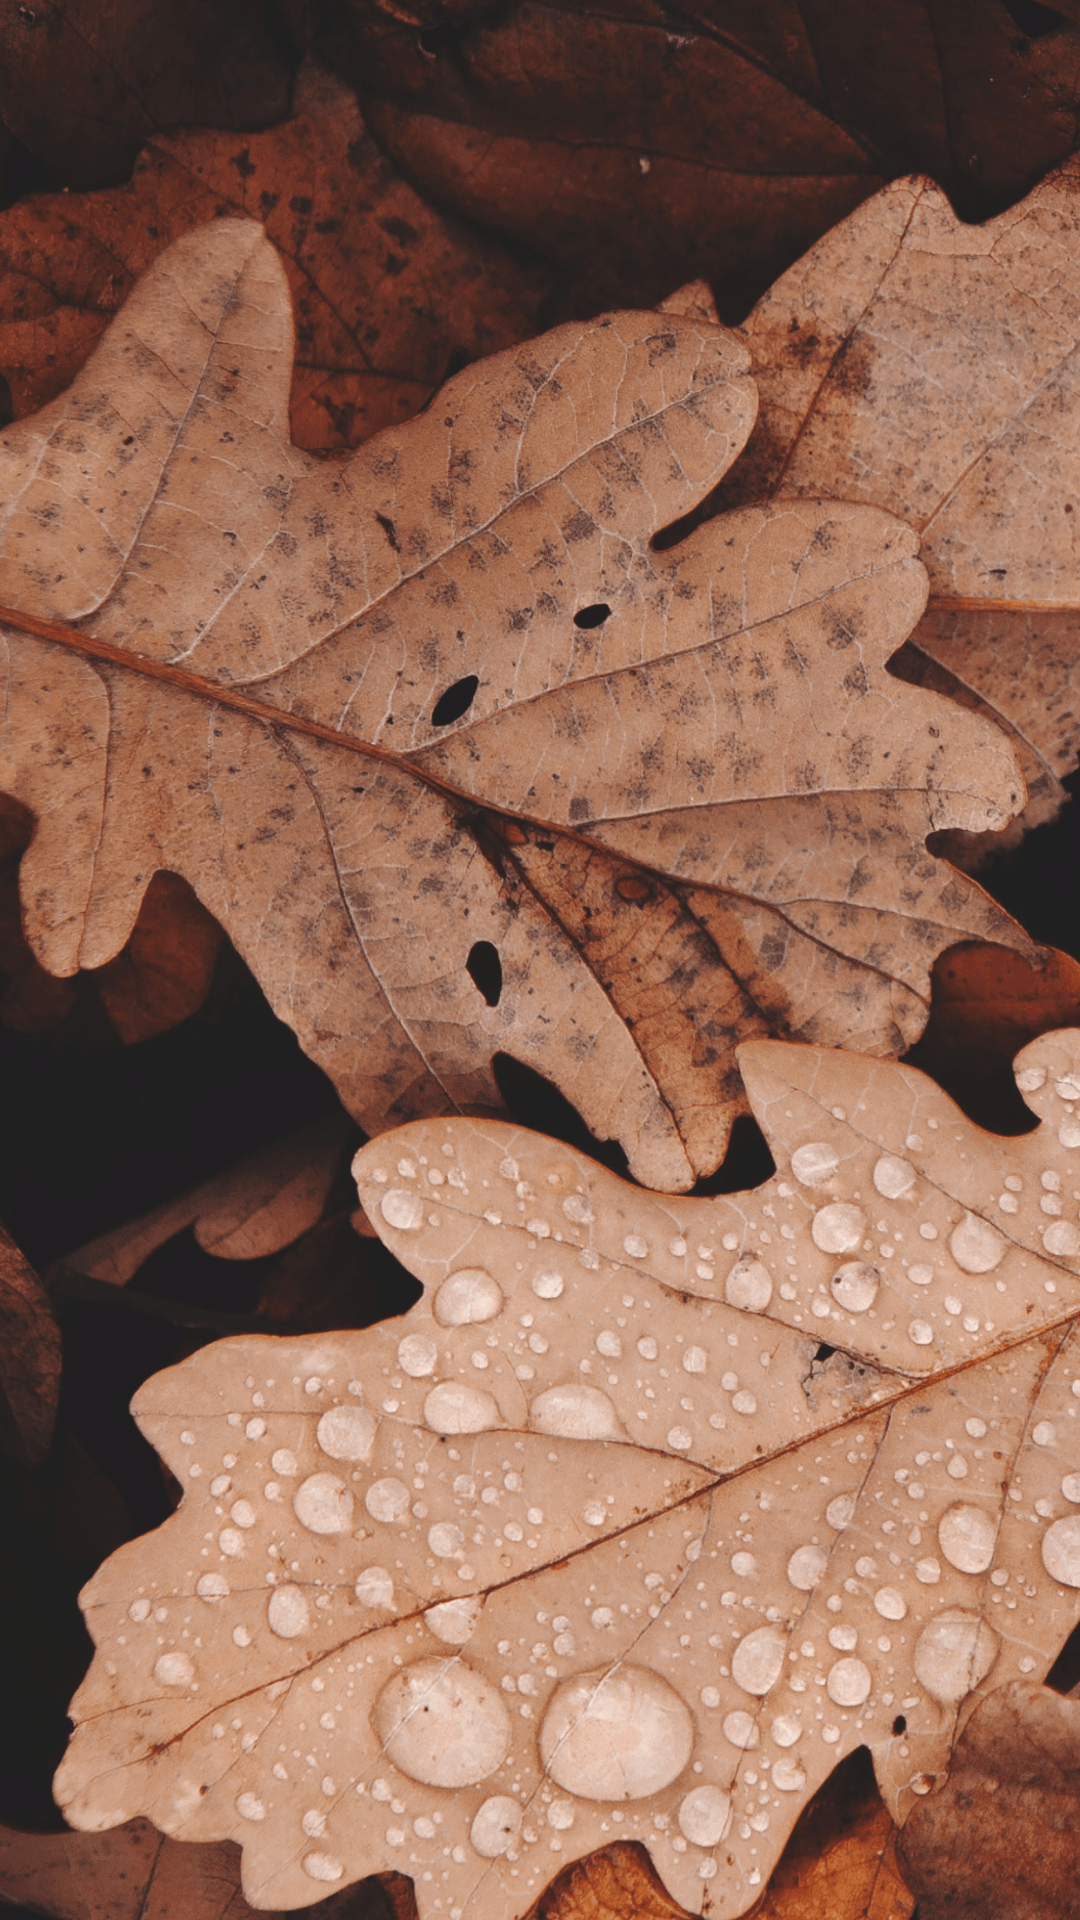 Water droplets on brown leaves. - Light brown